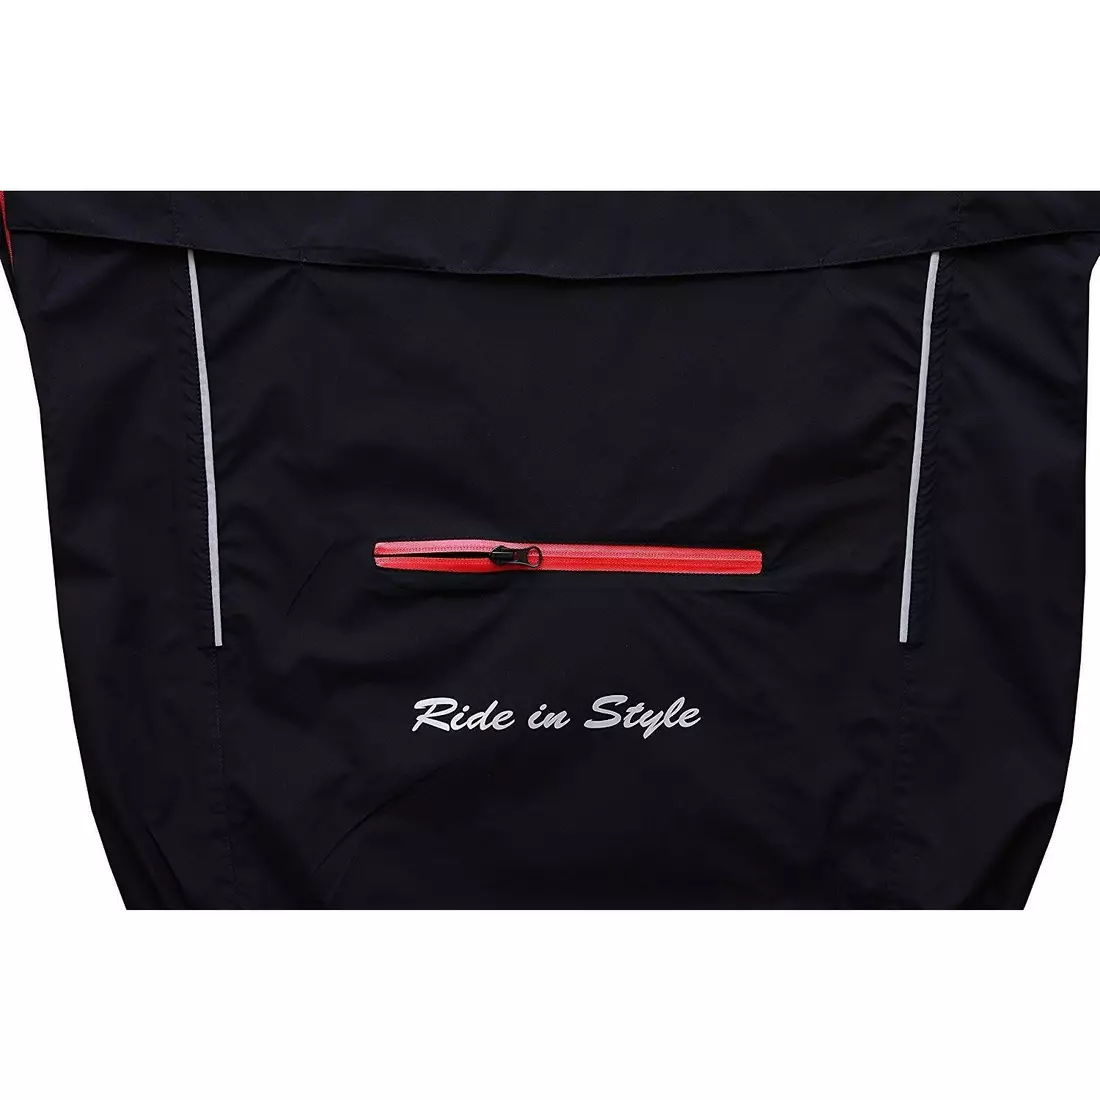 FDX 1410 men's cycling rain jacket, black-red